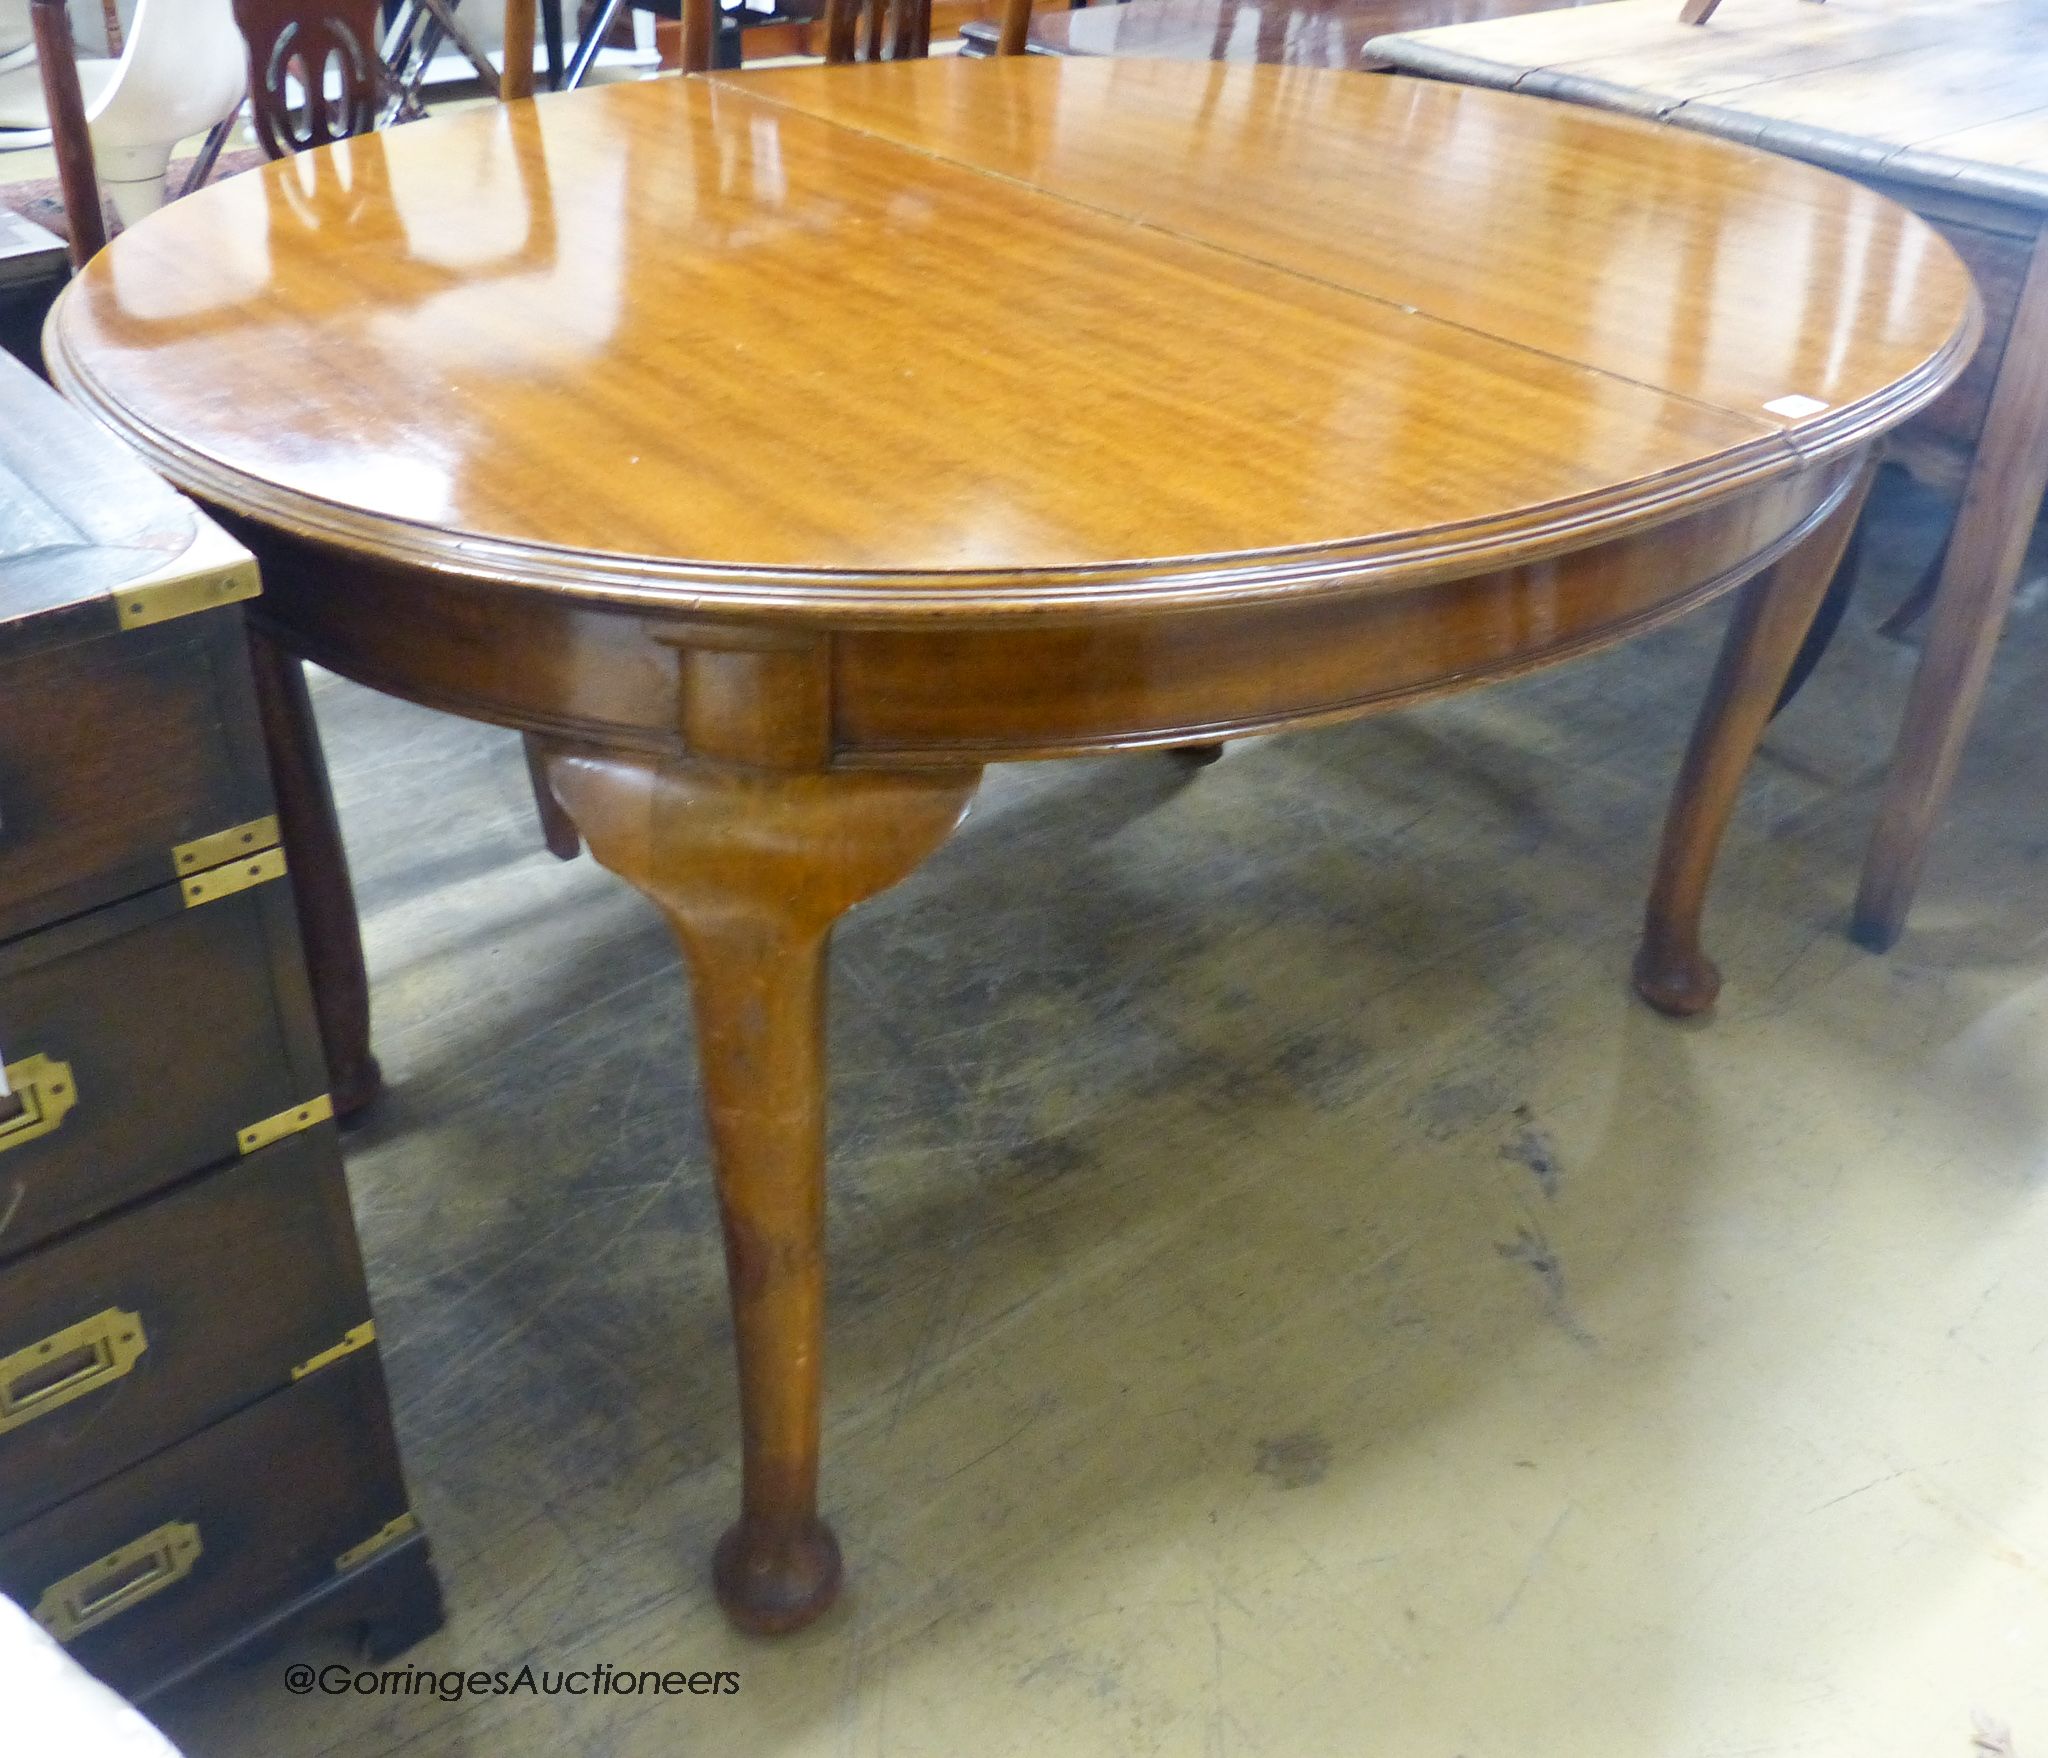 A 1920's mahogany extending dining table, length 141cm, depth 110cm, height 76cm